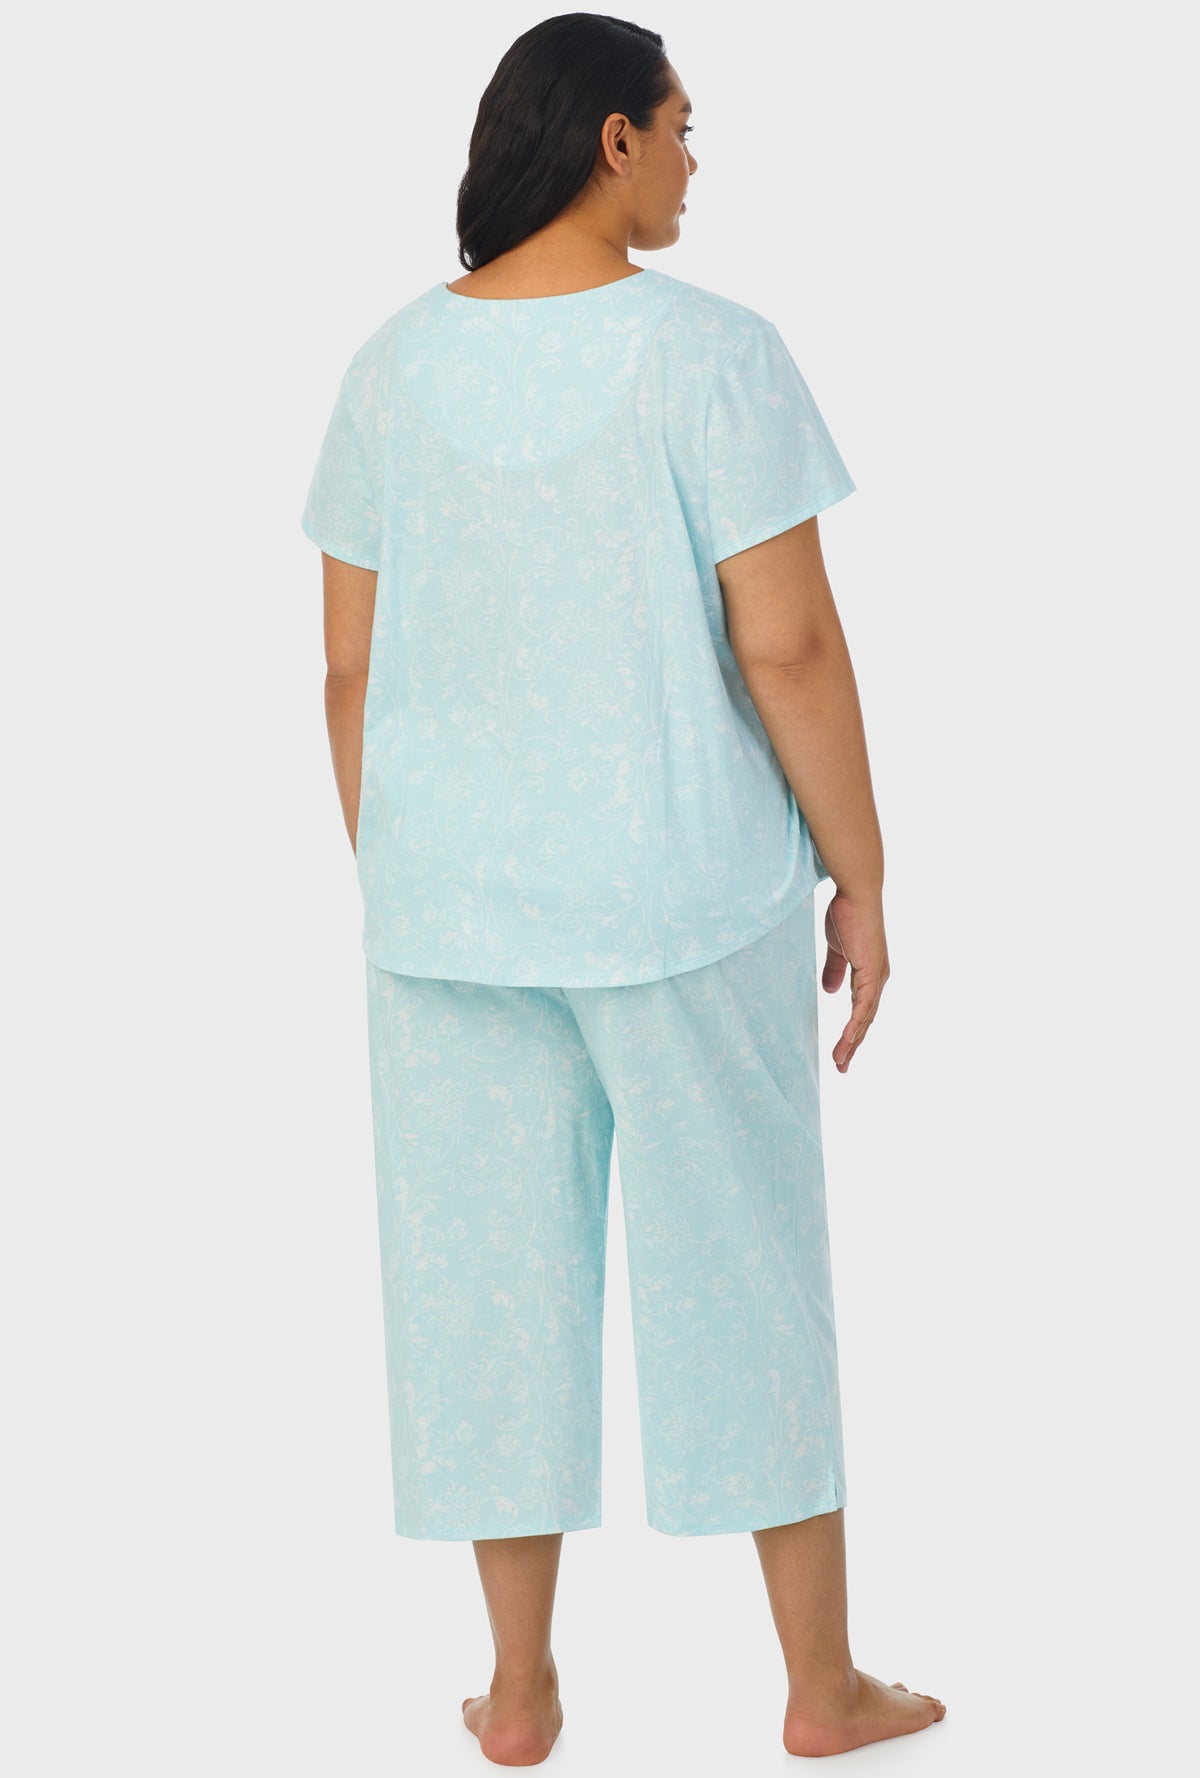 A lady wearing aqua short sleeve capri plus size pant pj set with scroll print.